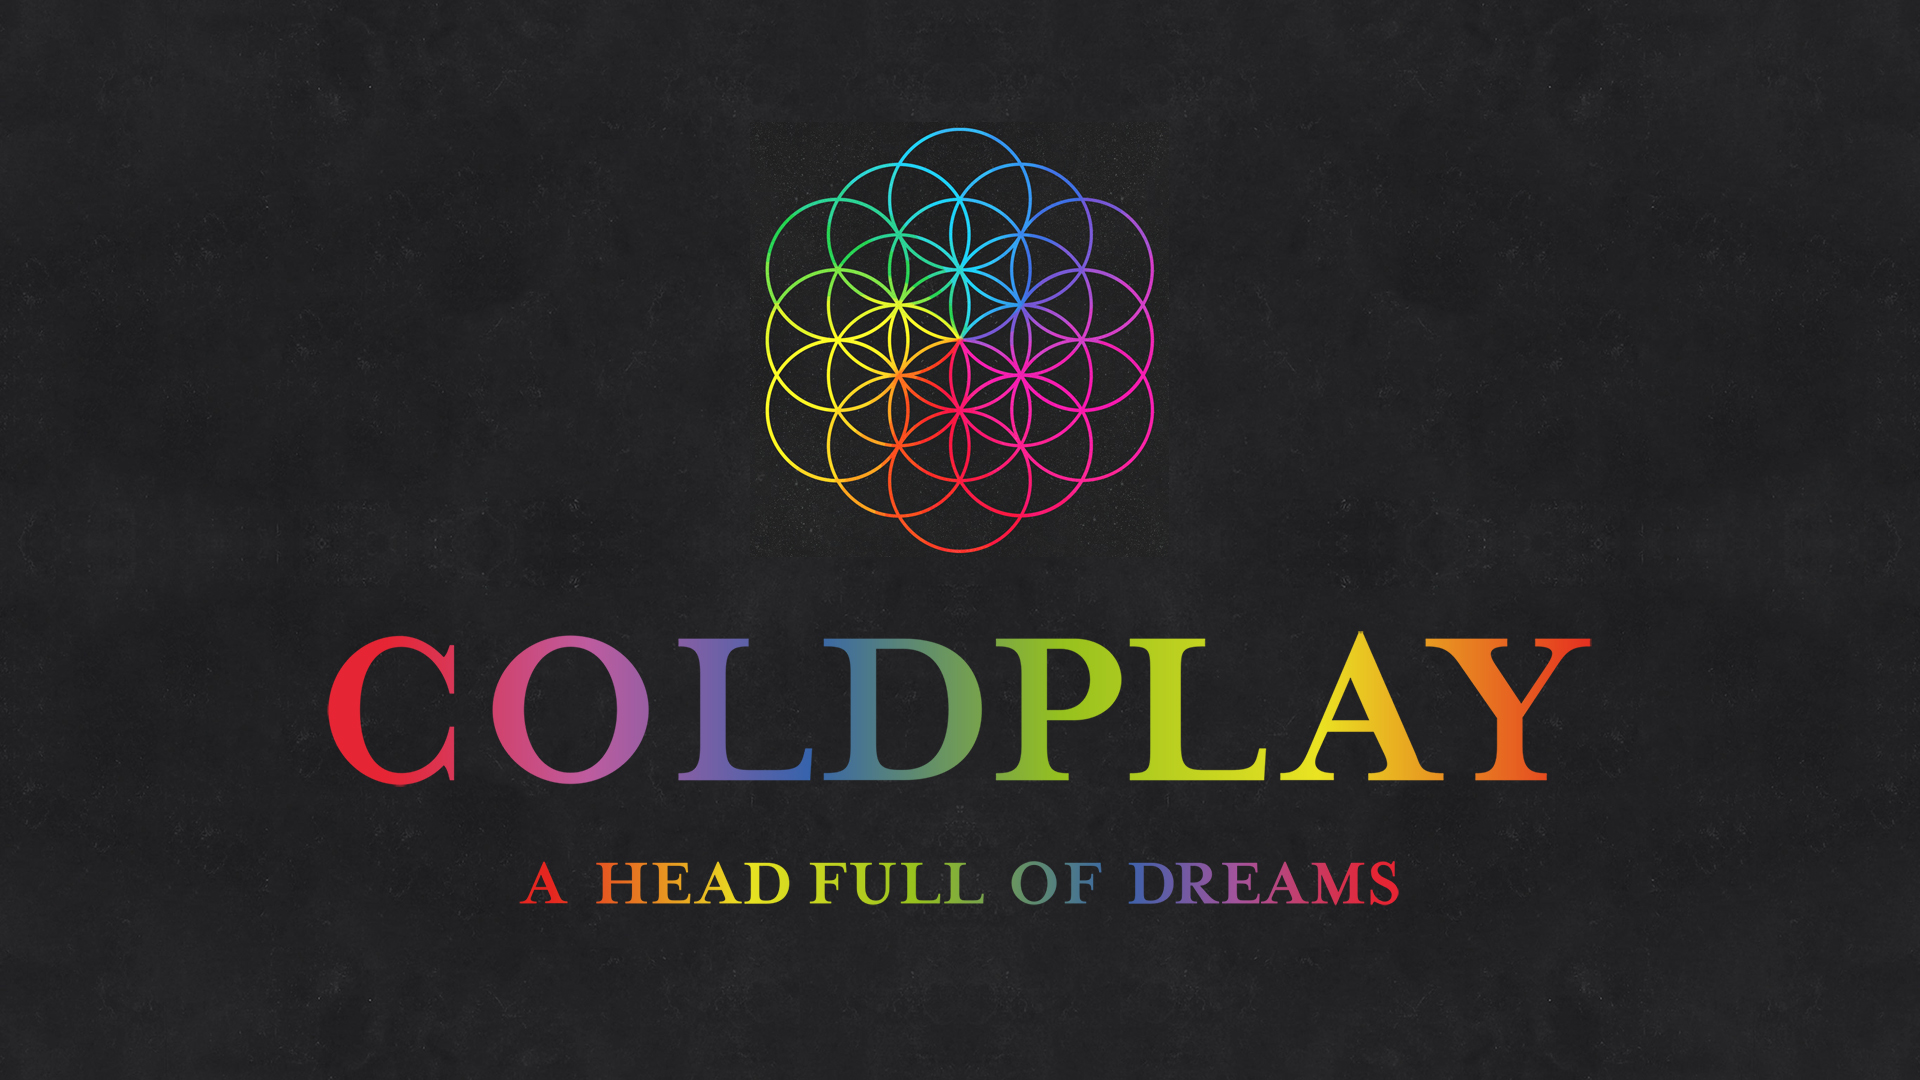 Coldplay 4 dicembre esce A head full of dreams date concerti e sorpresa per i fan